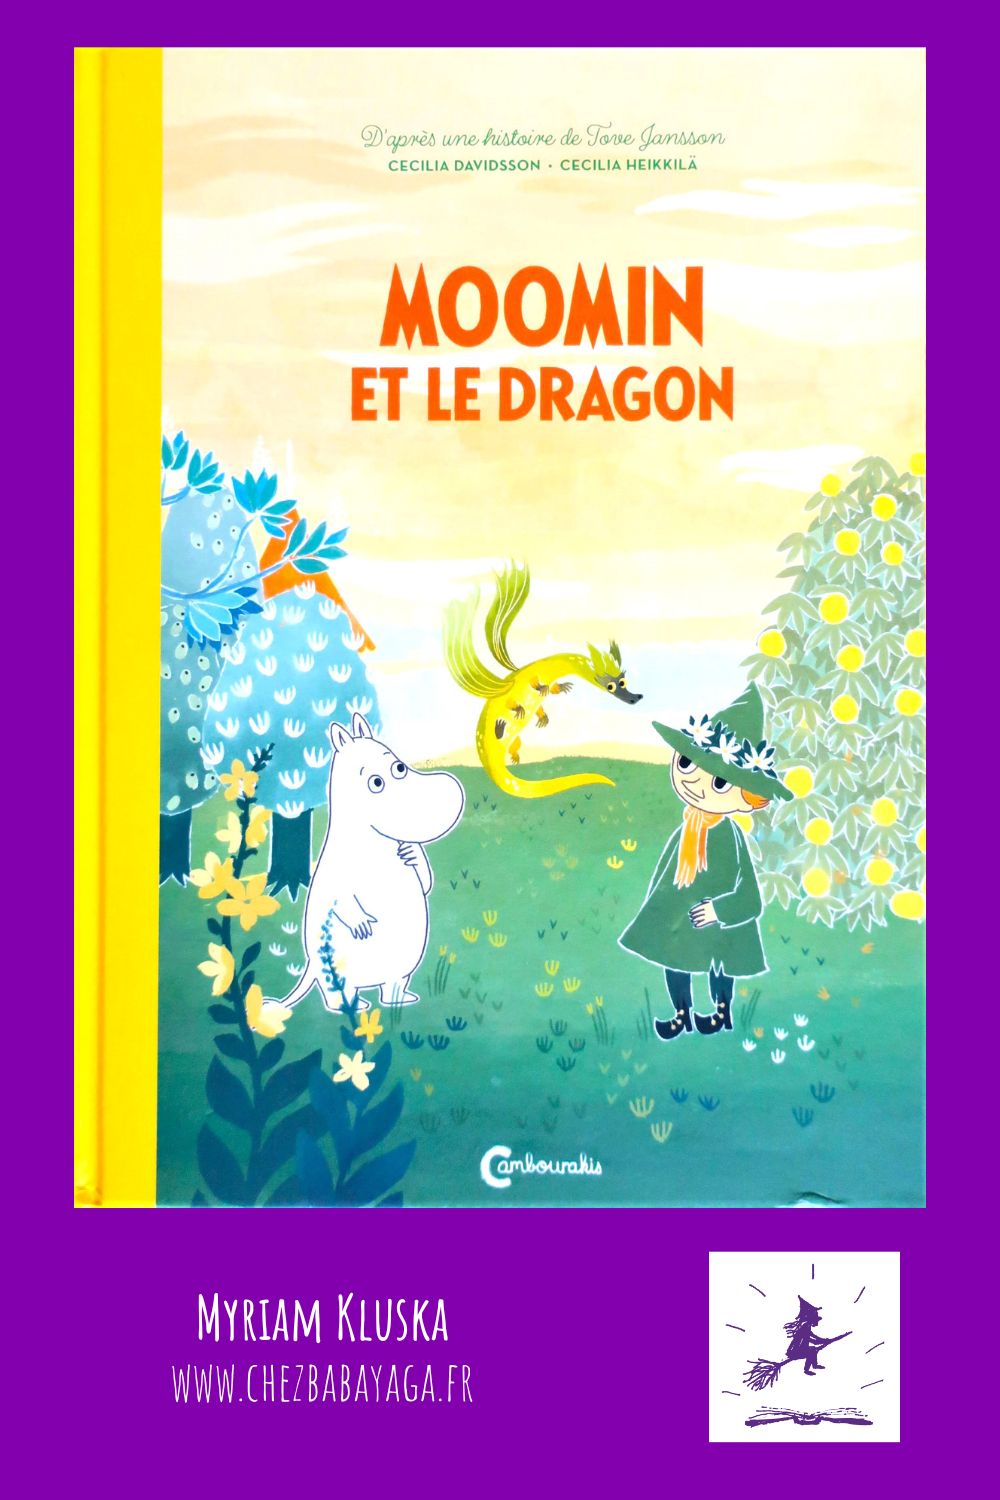 Moomin-et-le-dragon-Davidsson-Heikkila-Tove-Jansson